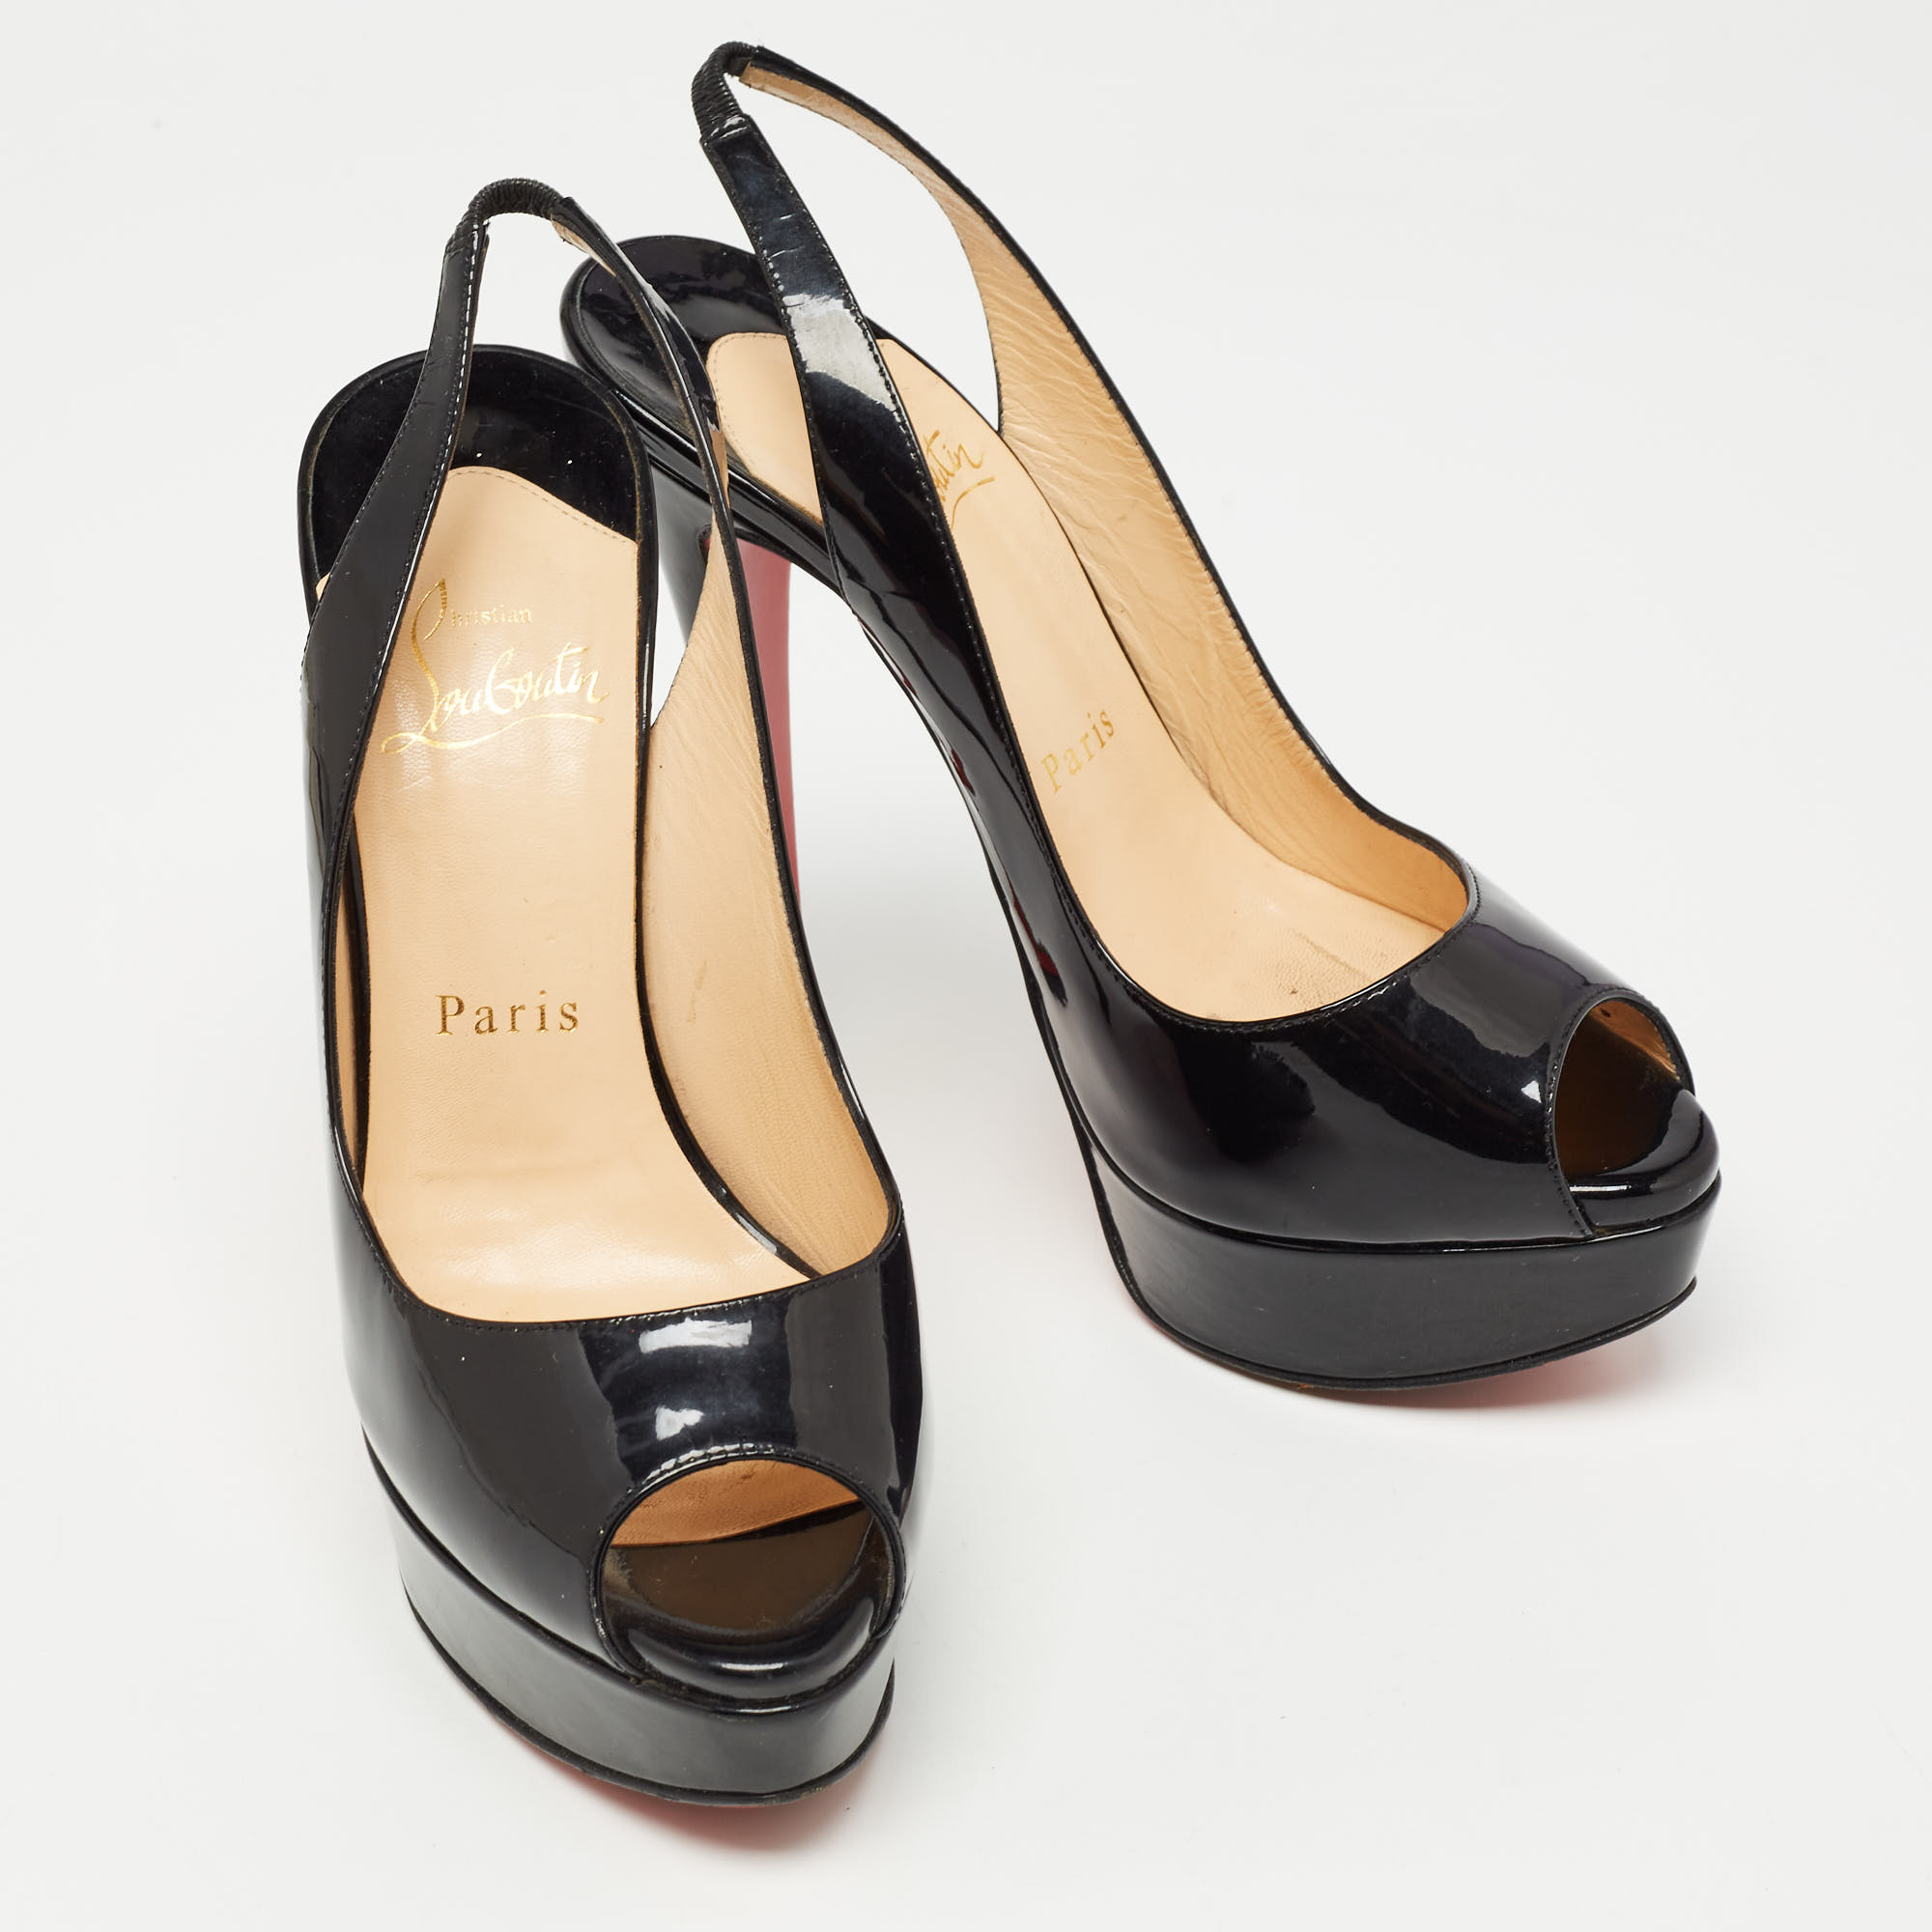 Christian Louboutin Black Patent Lady Peep Slingback Sandals Size 36.5